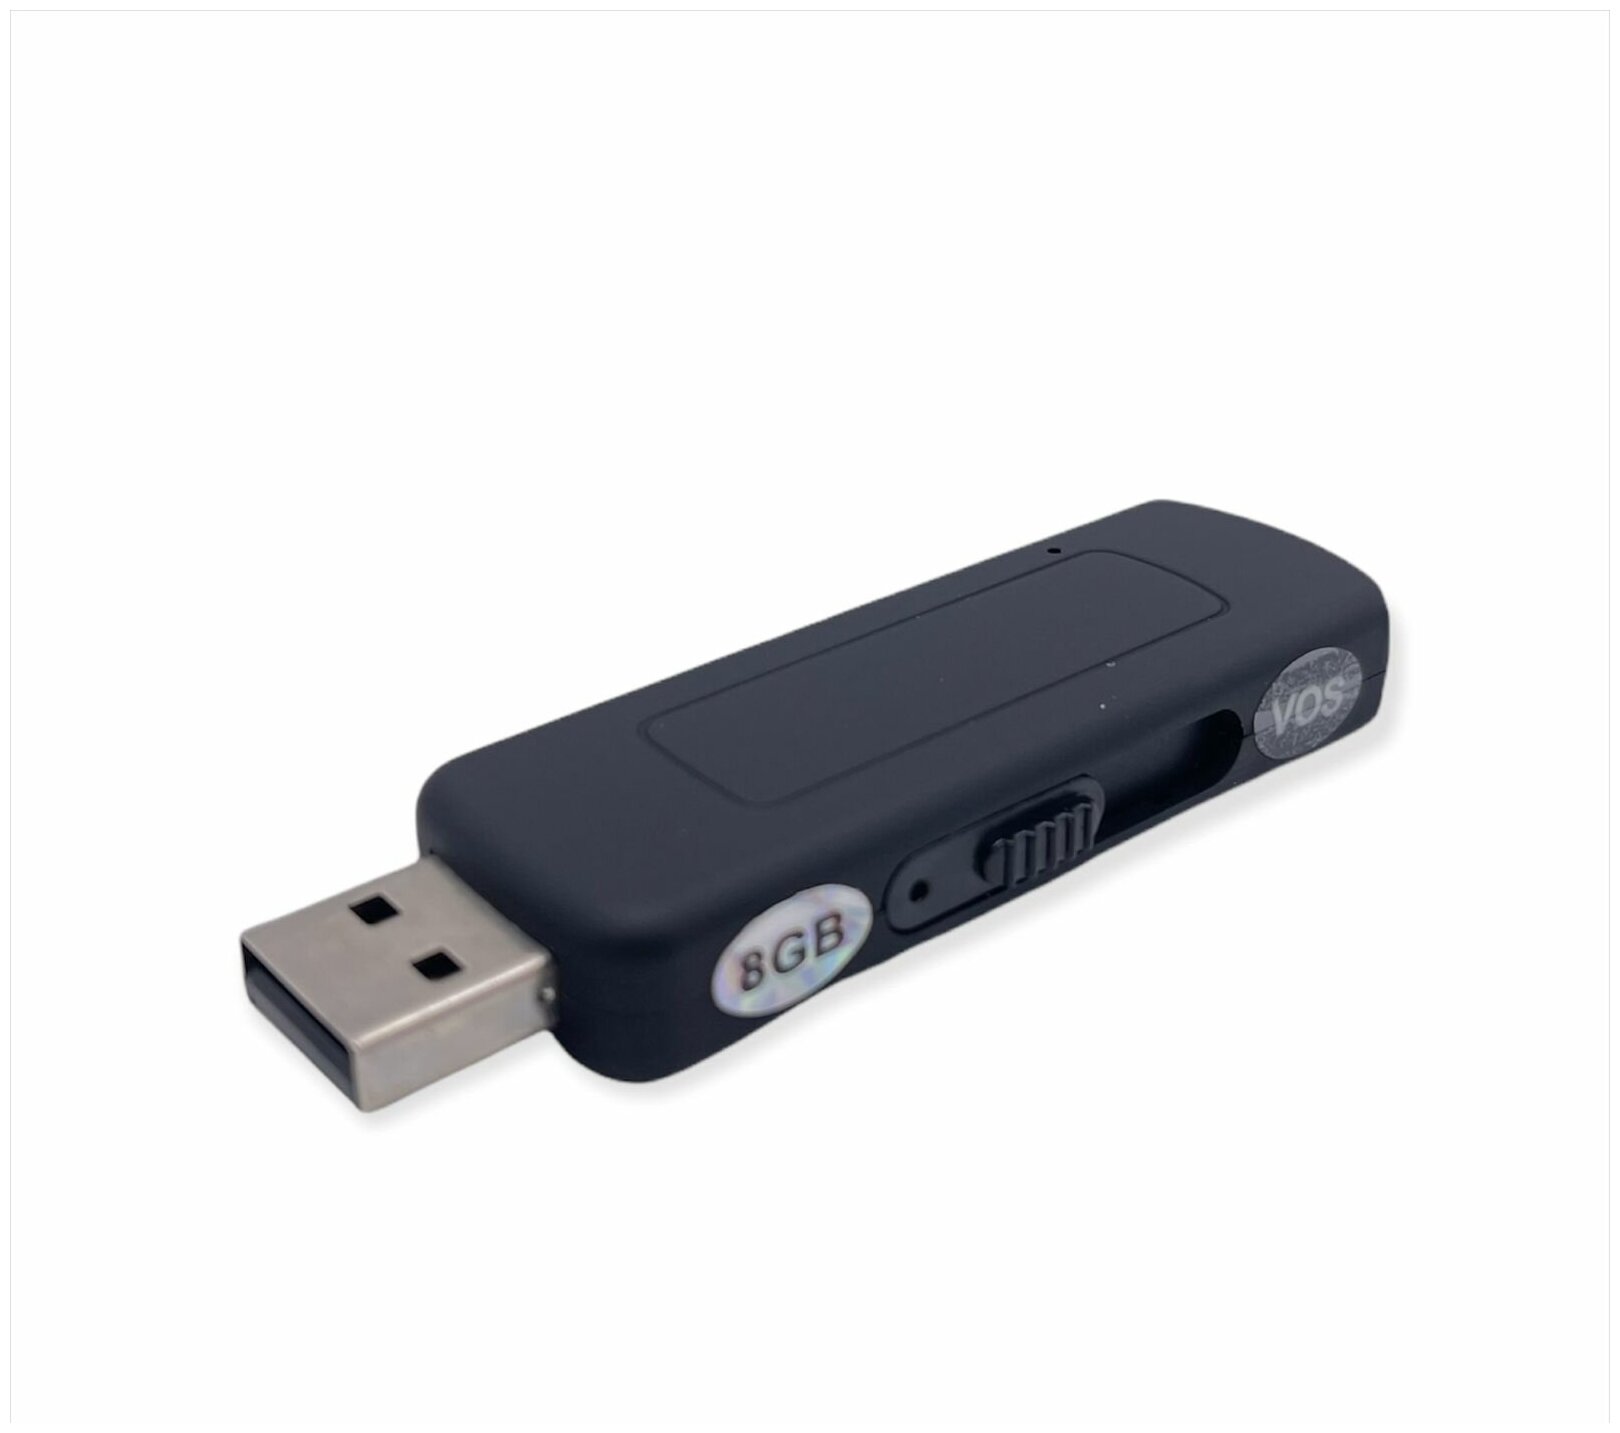 8 GB портативный диктофон VR-8 VOS USB 20 FLASH DRIVE запись по датчику звука/ USB voice recorder/ диктофон / диктофон флешка